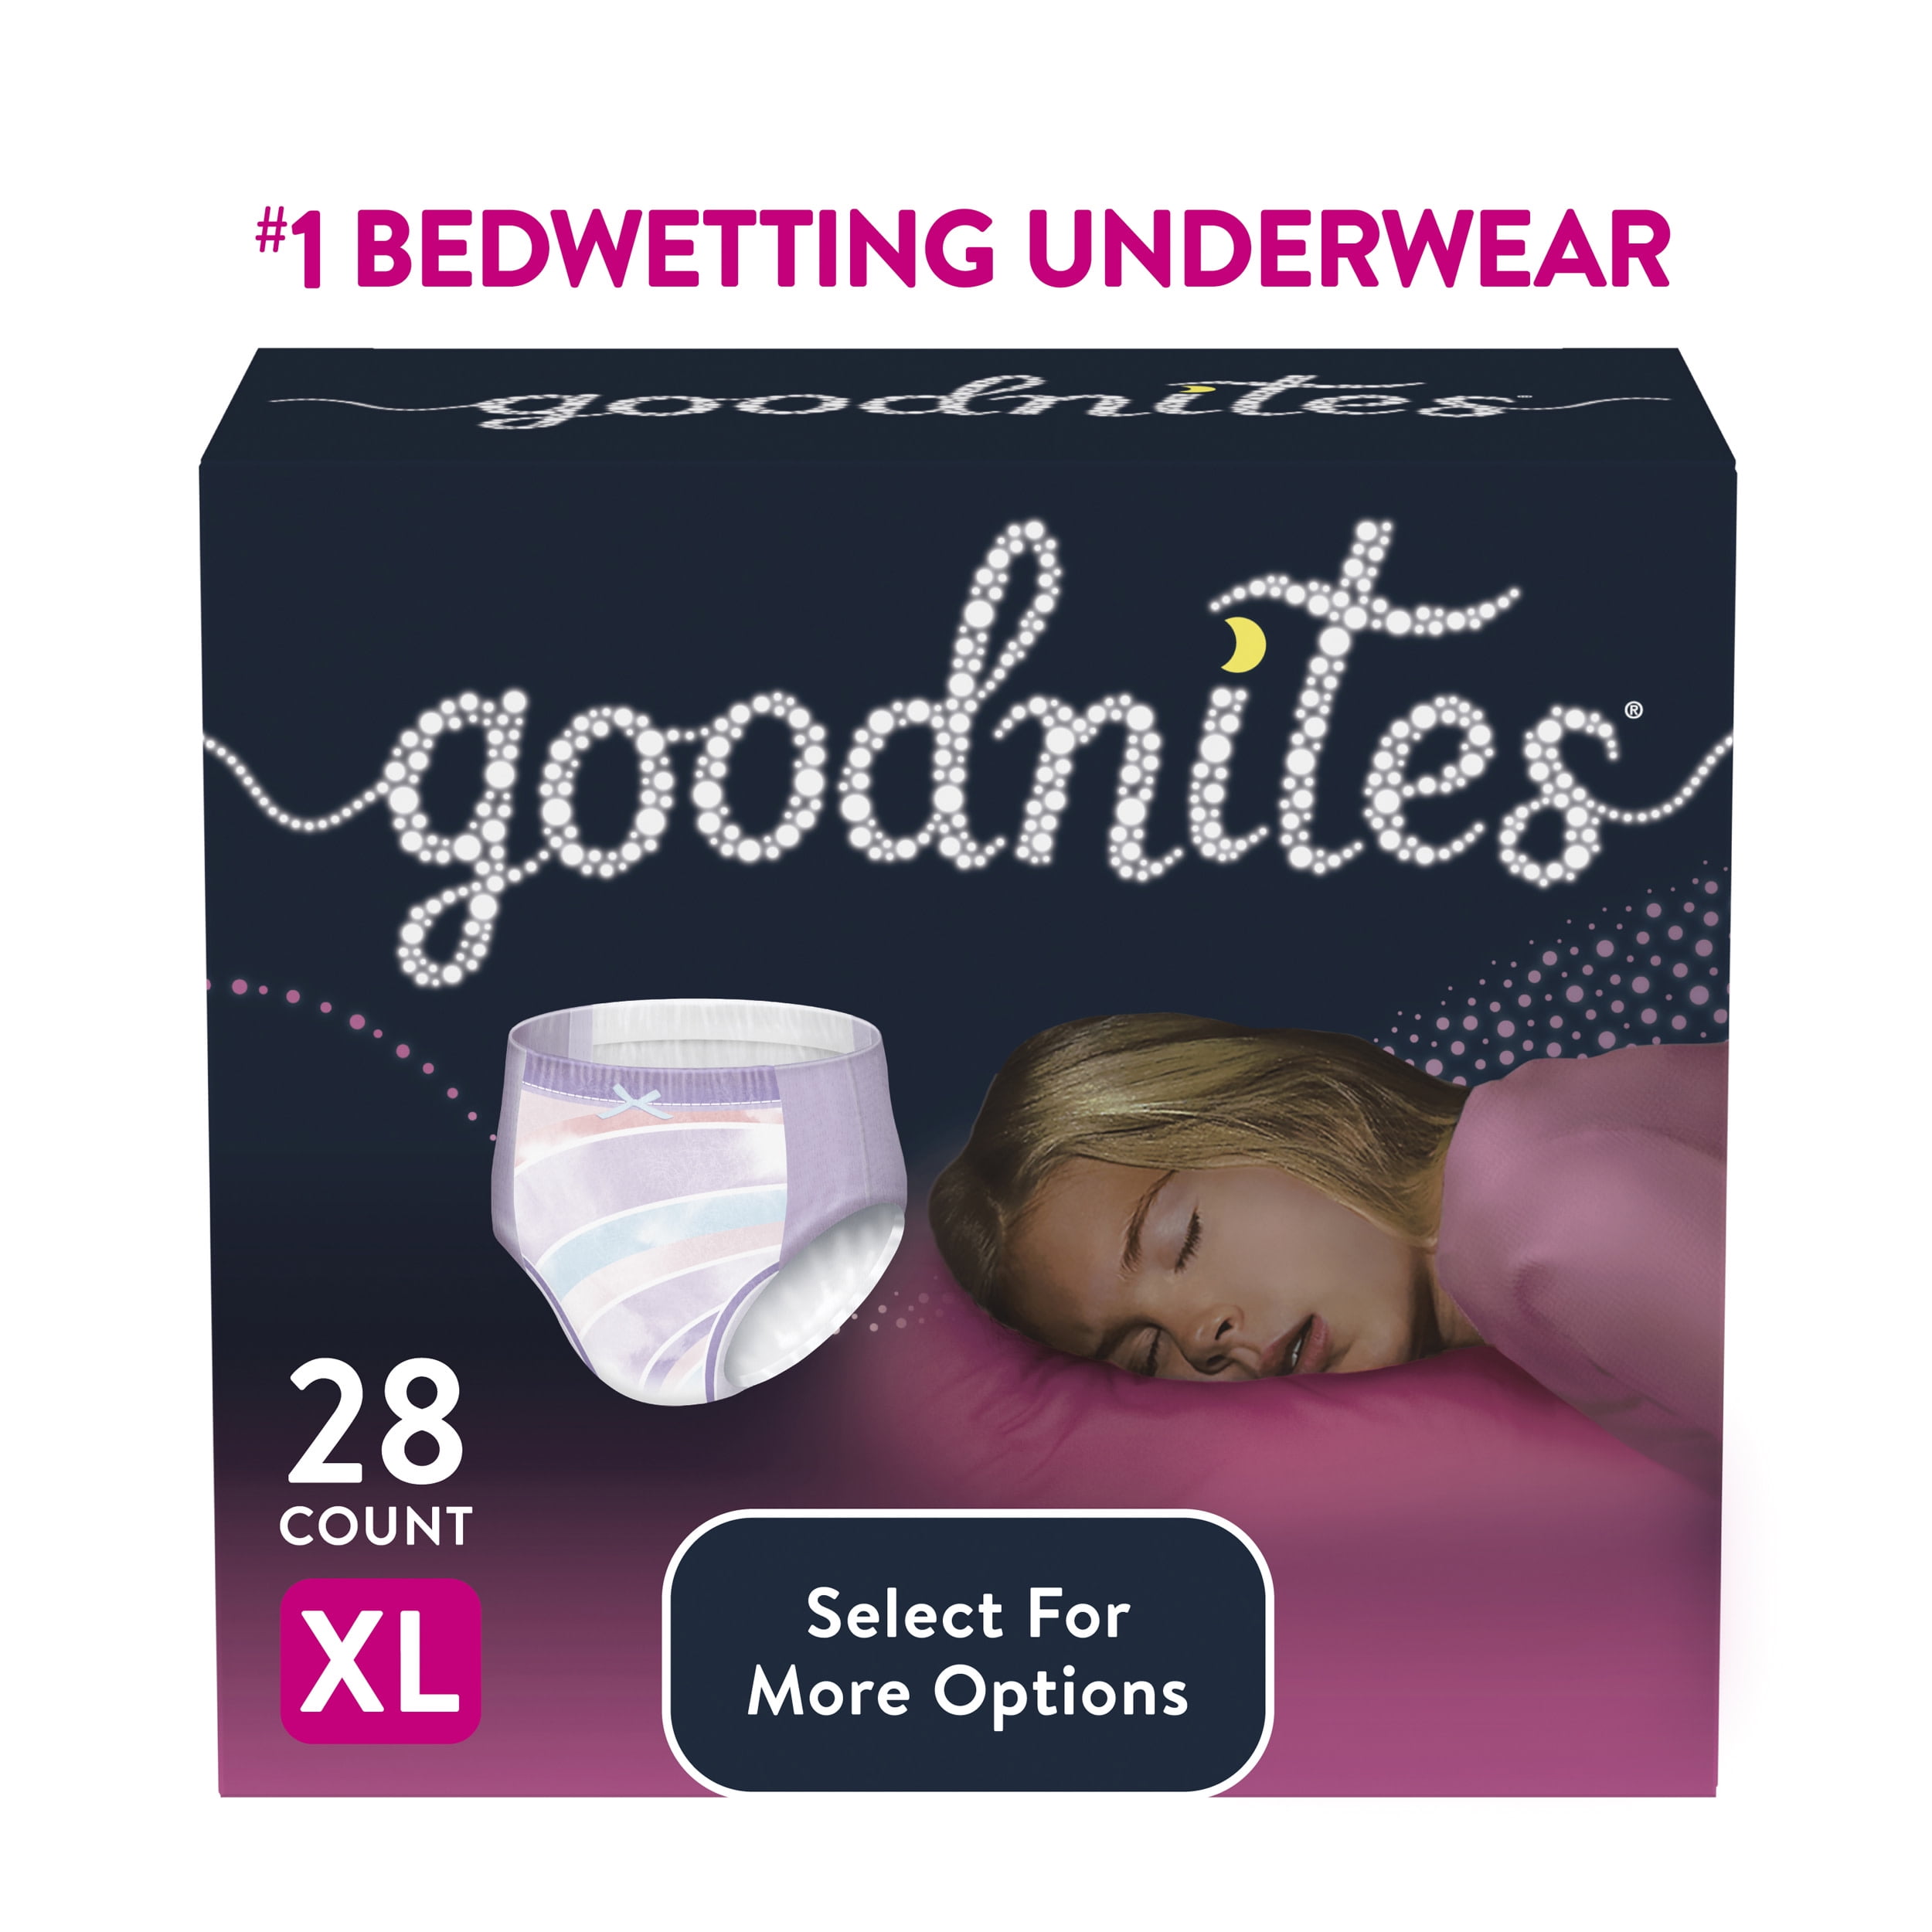 Goodnites Nighttime Bedwetting Underwear for Girls, XL, 28 Ct